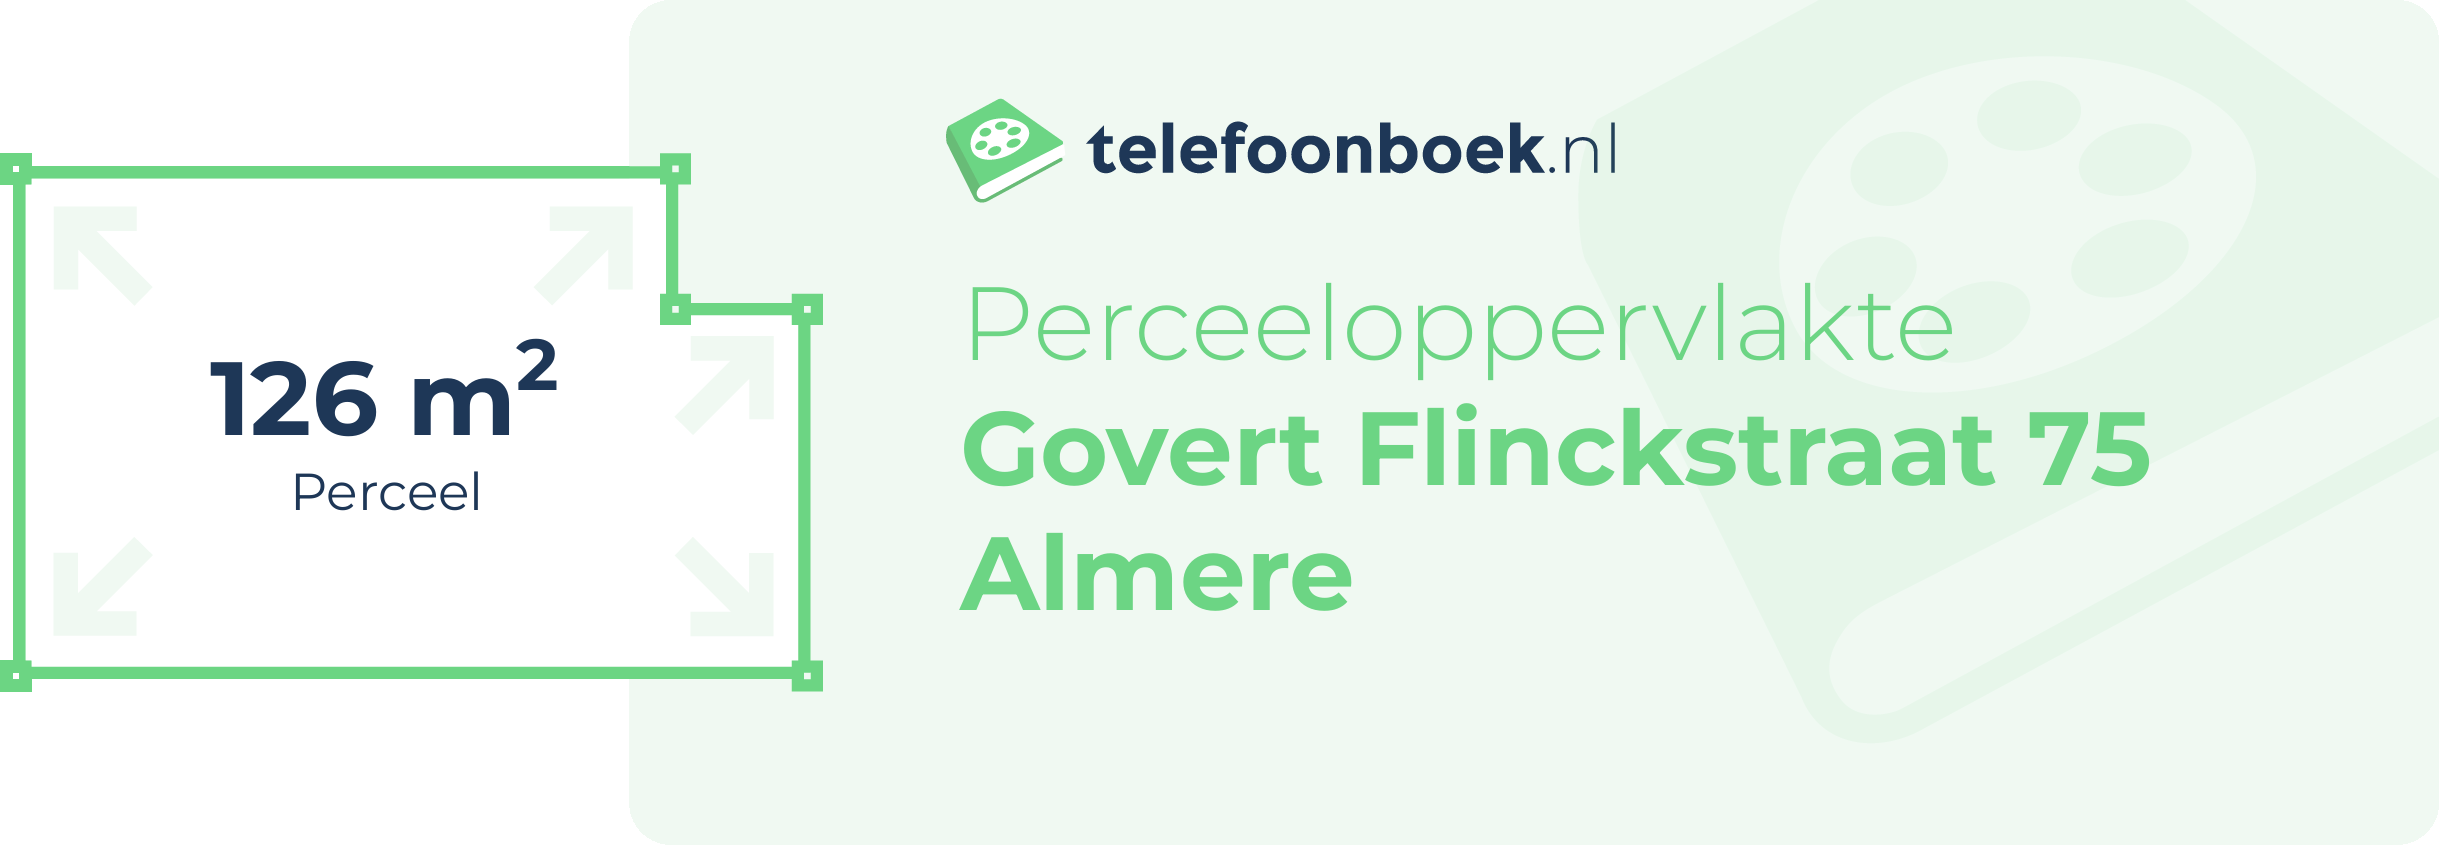 Perceeloppervlakte Govert Flinckstraat 75 Almere